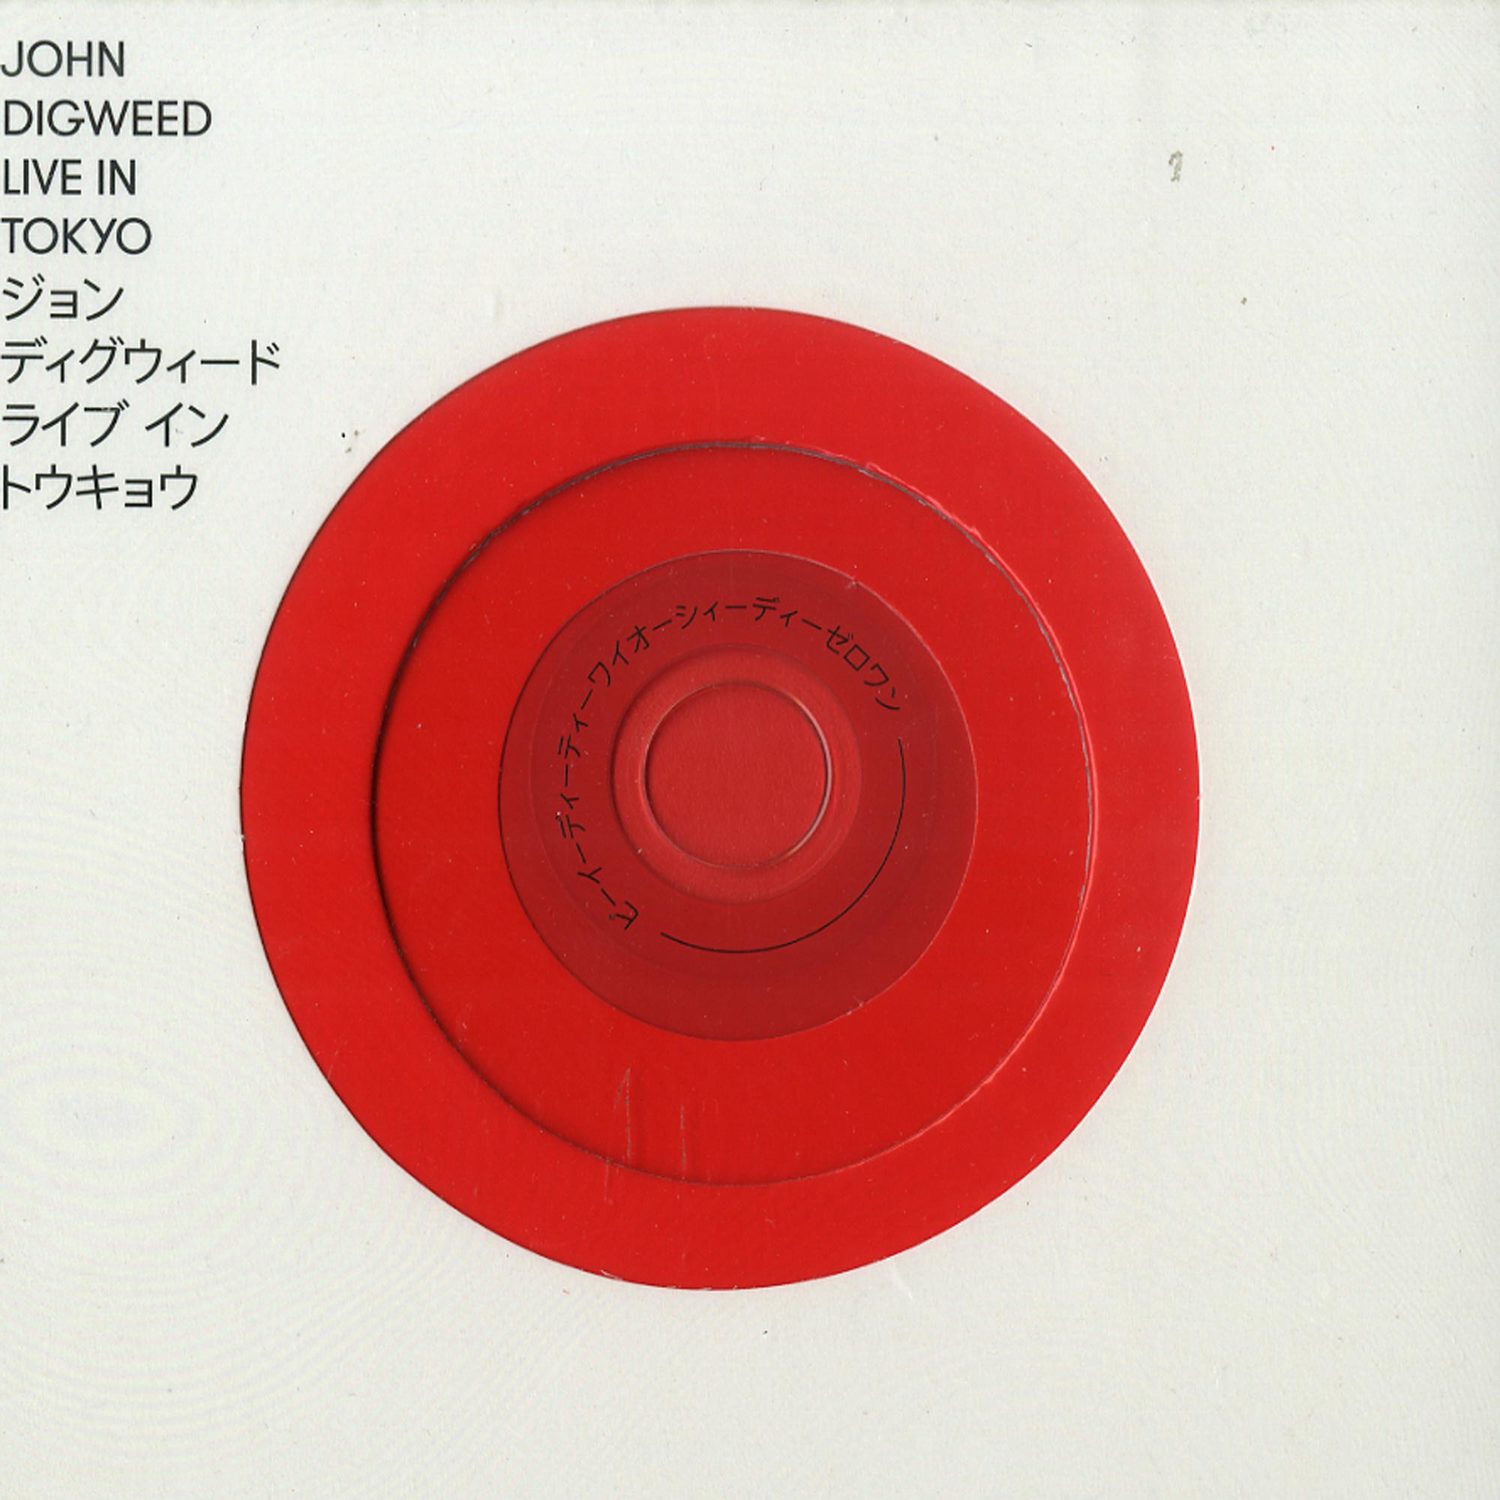 John Digweed - JOHN DIGWEED LIVE IN TOKYO 